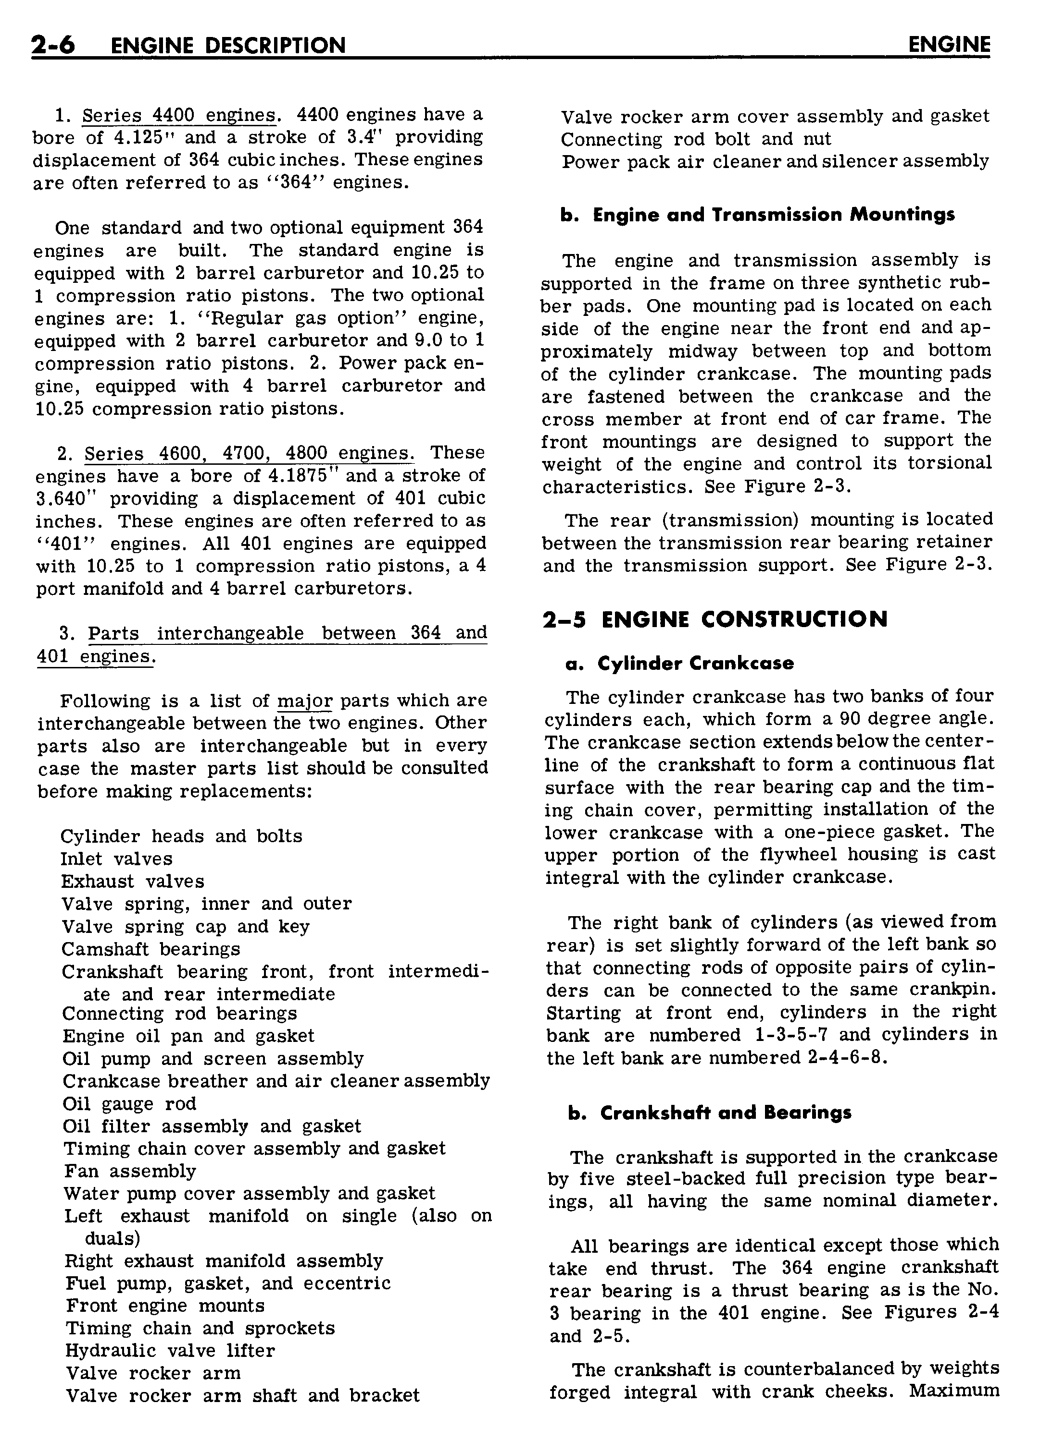 n_03 1961 Buick Shop Manual - Engine-006-006.jpg